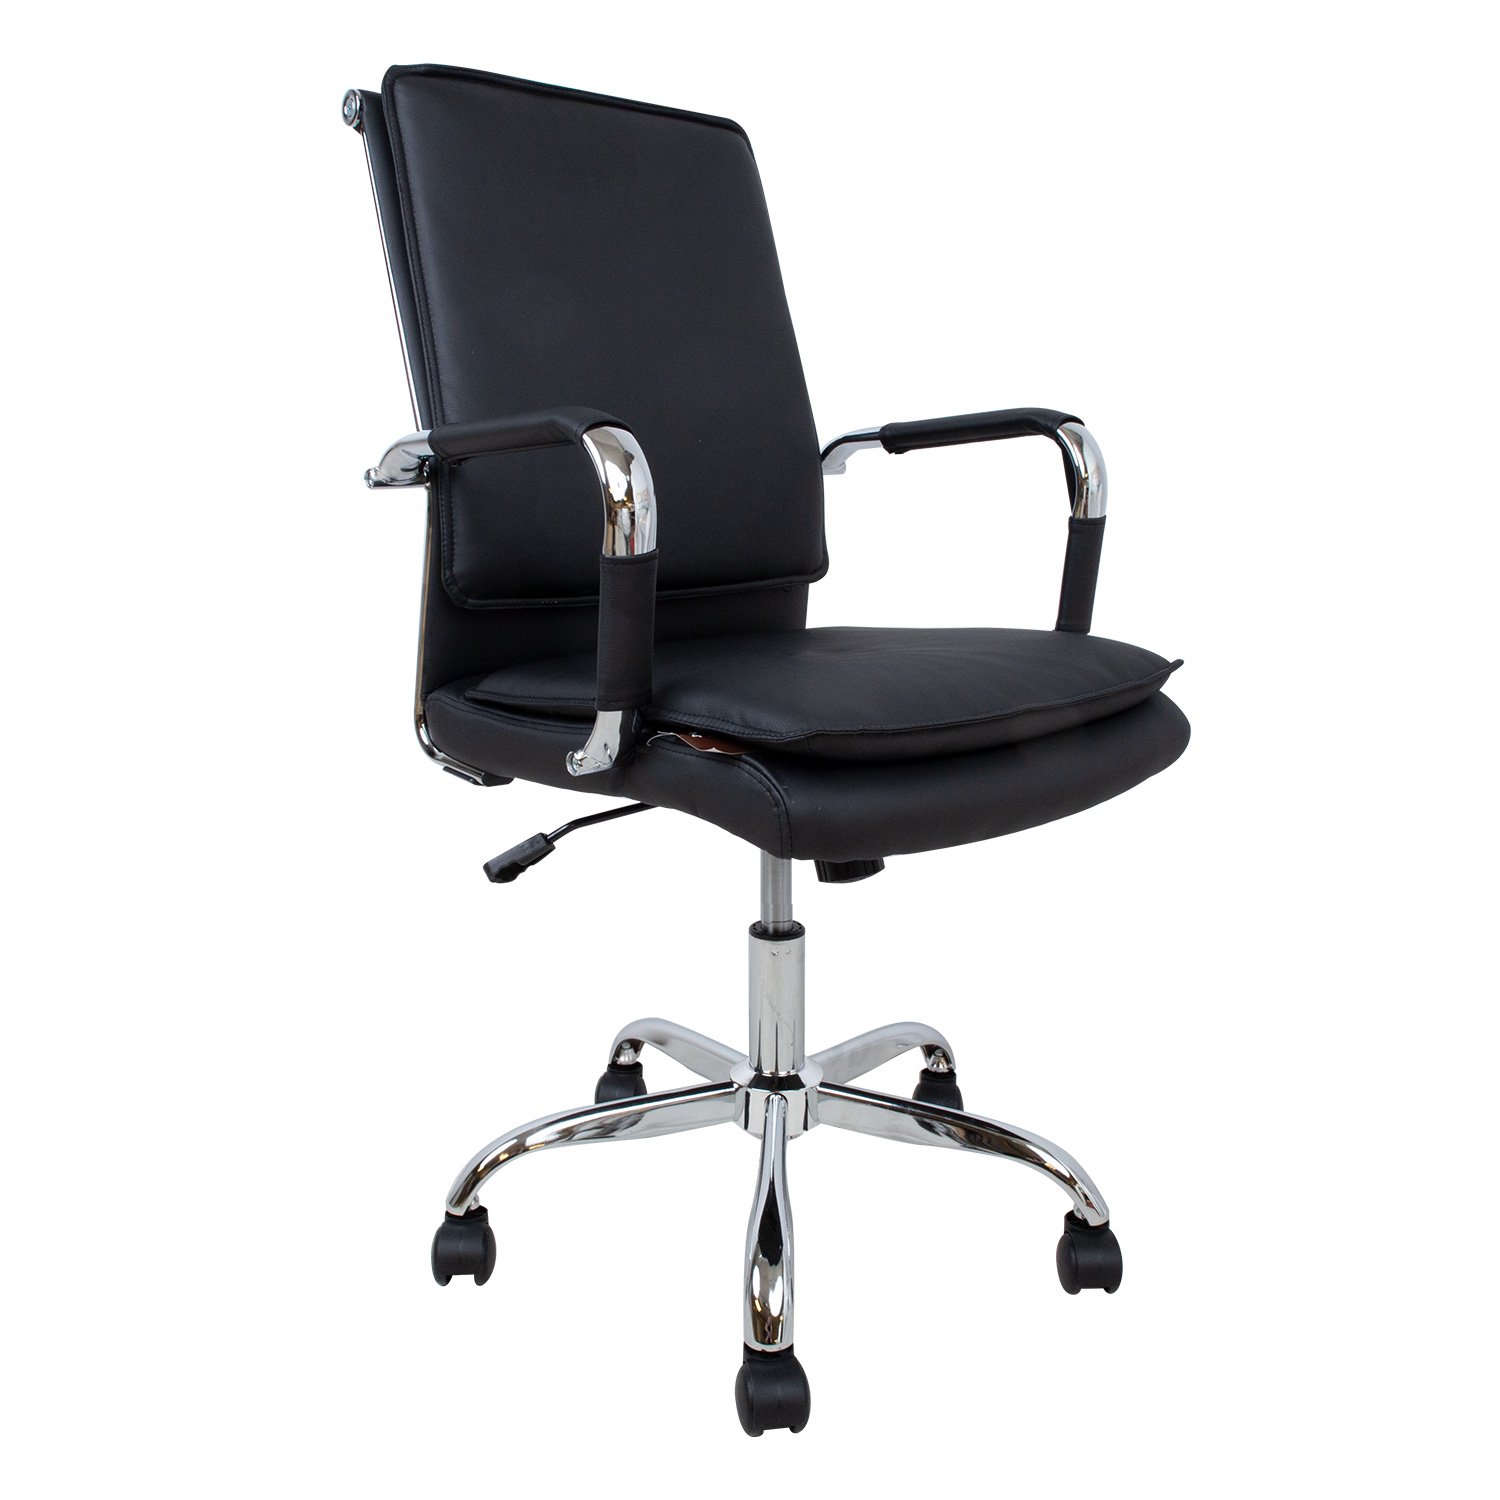 Biuro kėdė ULTRA, 54,5x63xH94-104 cm, juoda